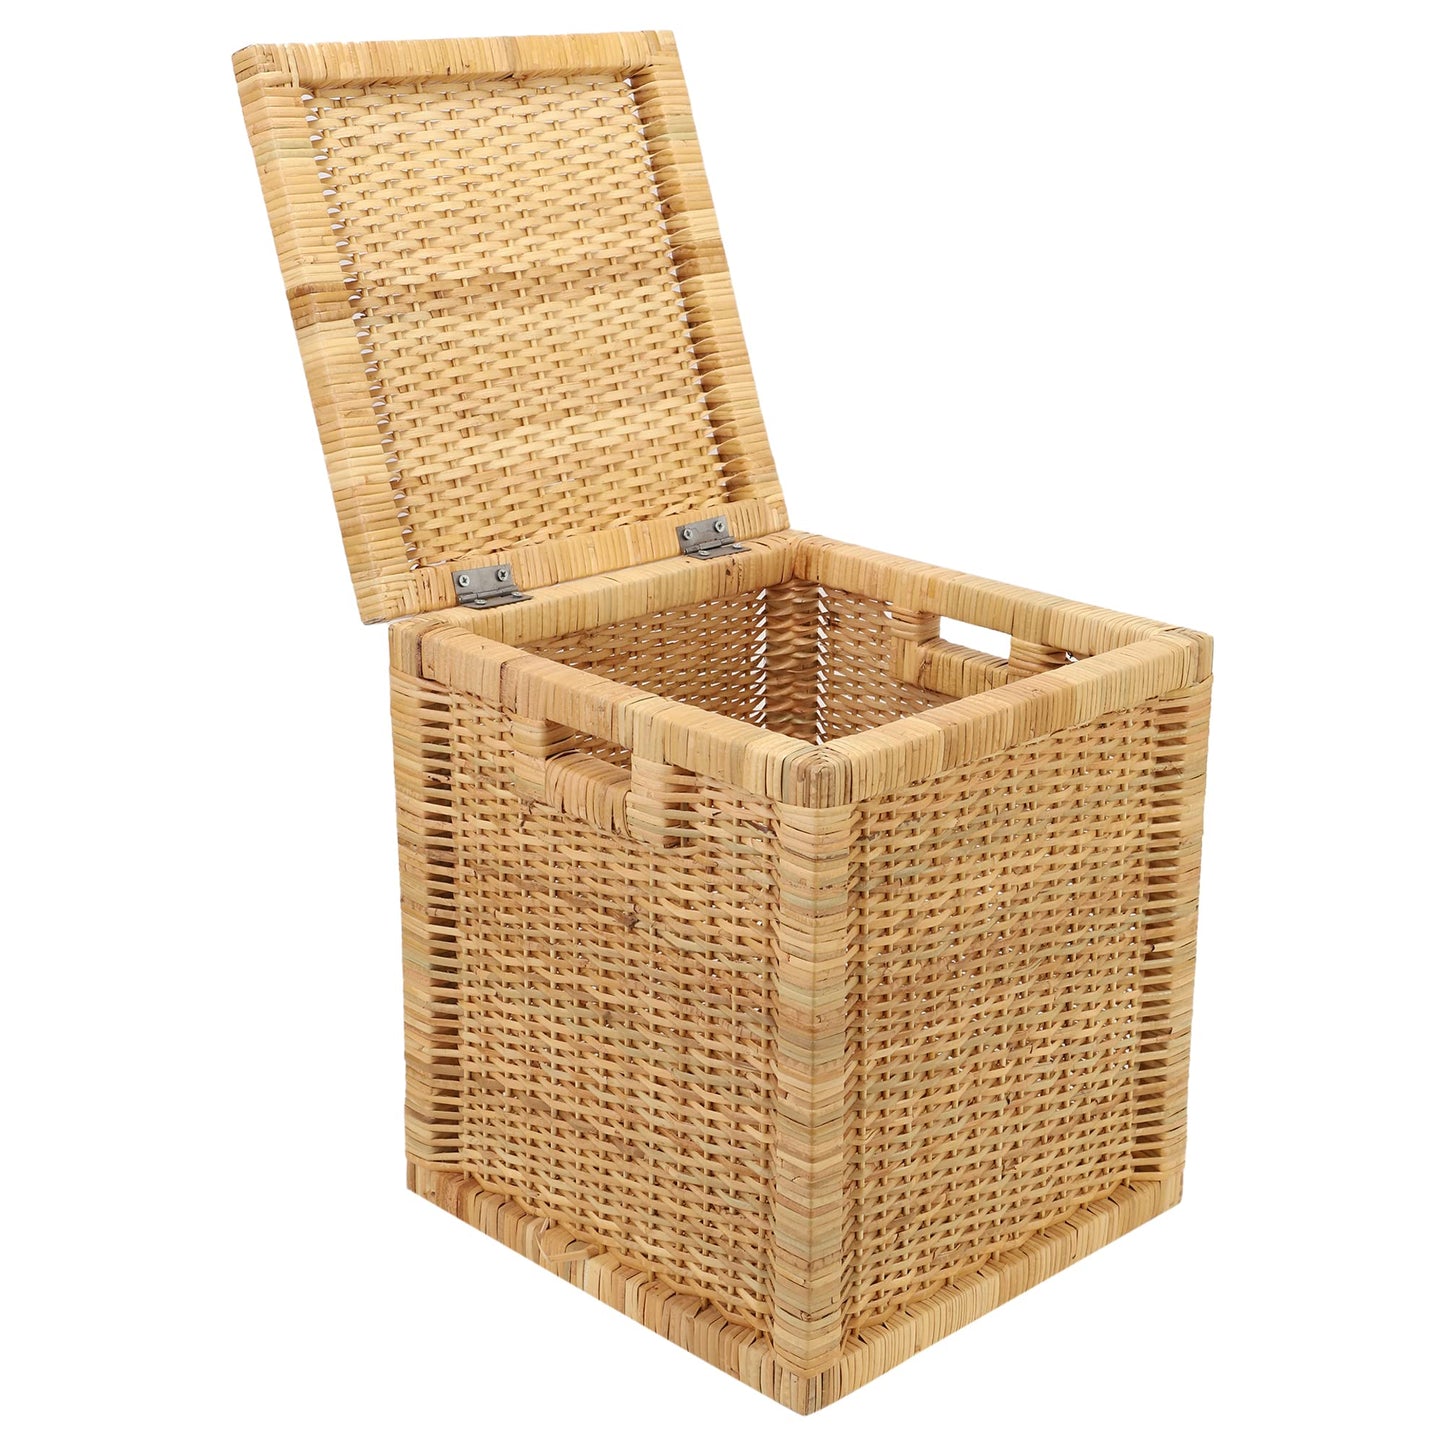 AKWAY wicker water hyacinth kauna grass bamboo cane Storage Basket with Lids | laundry hampers for bathroom wicker laundry basket storage basket(16"L x 16"W x 18"H)- Akway